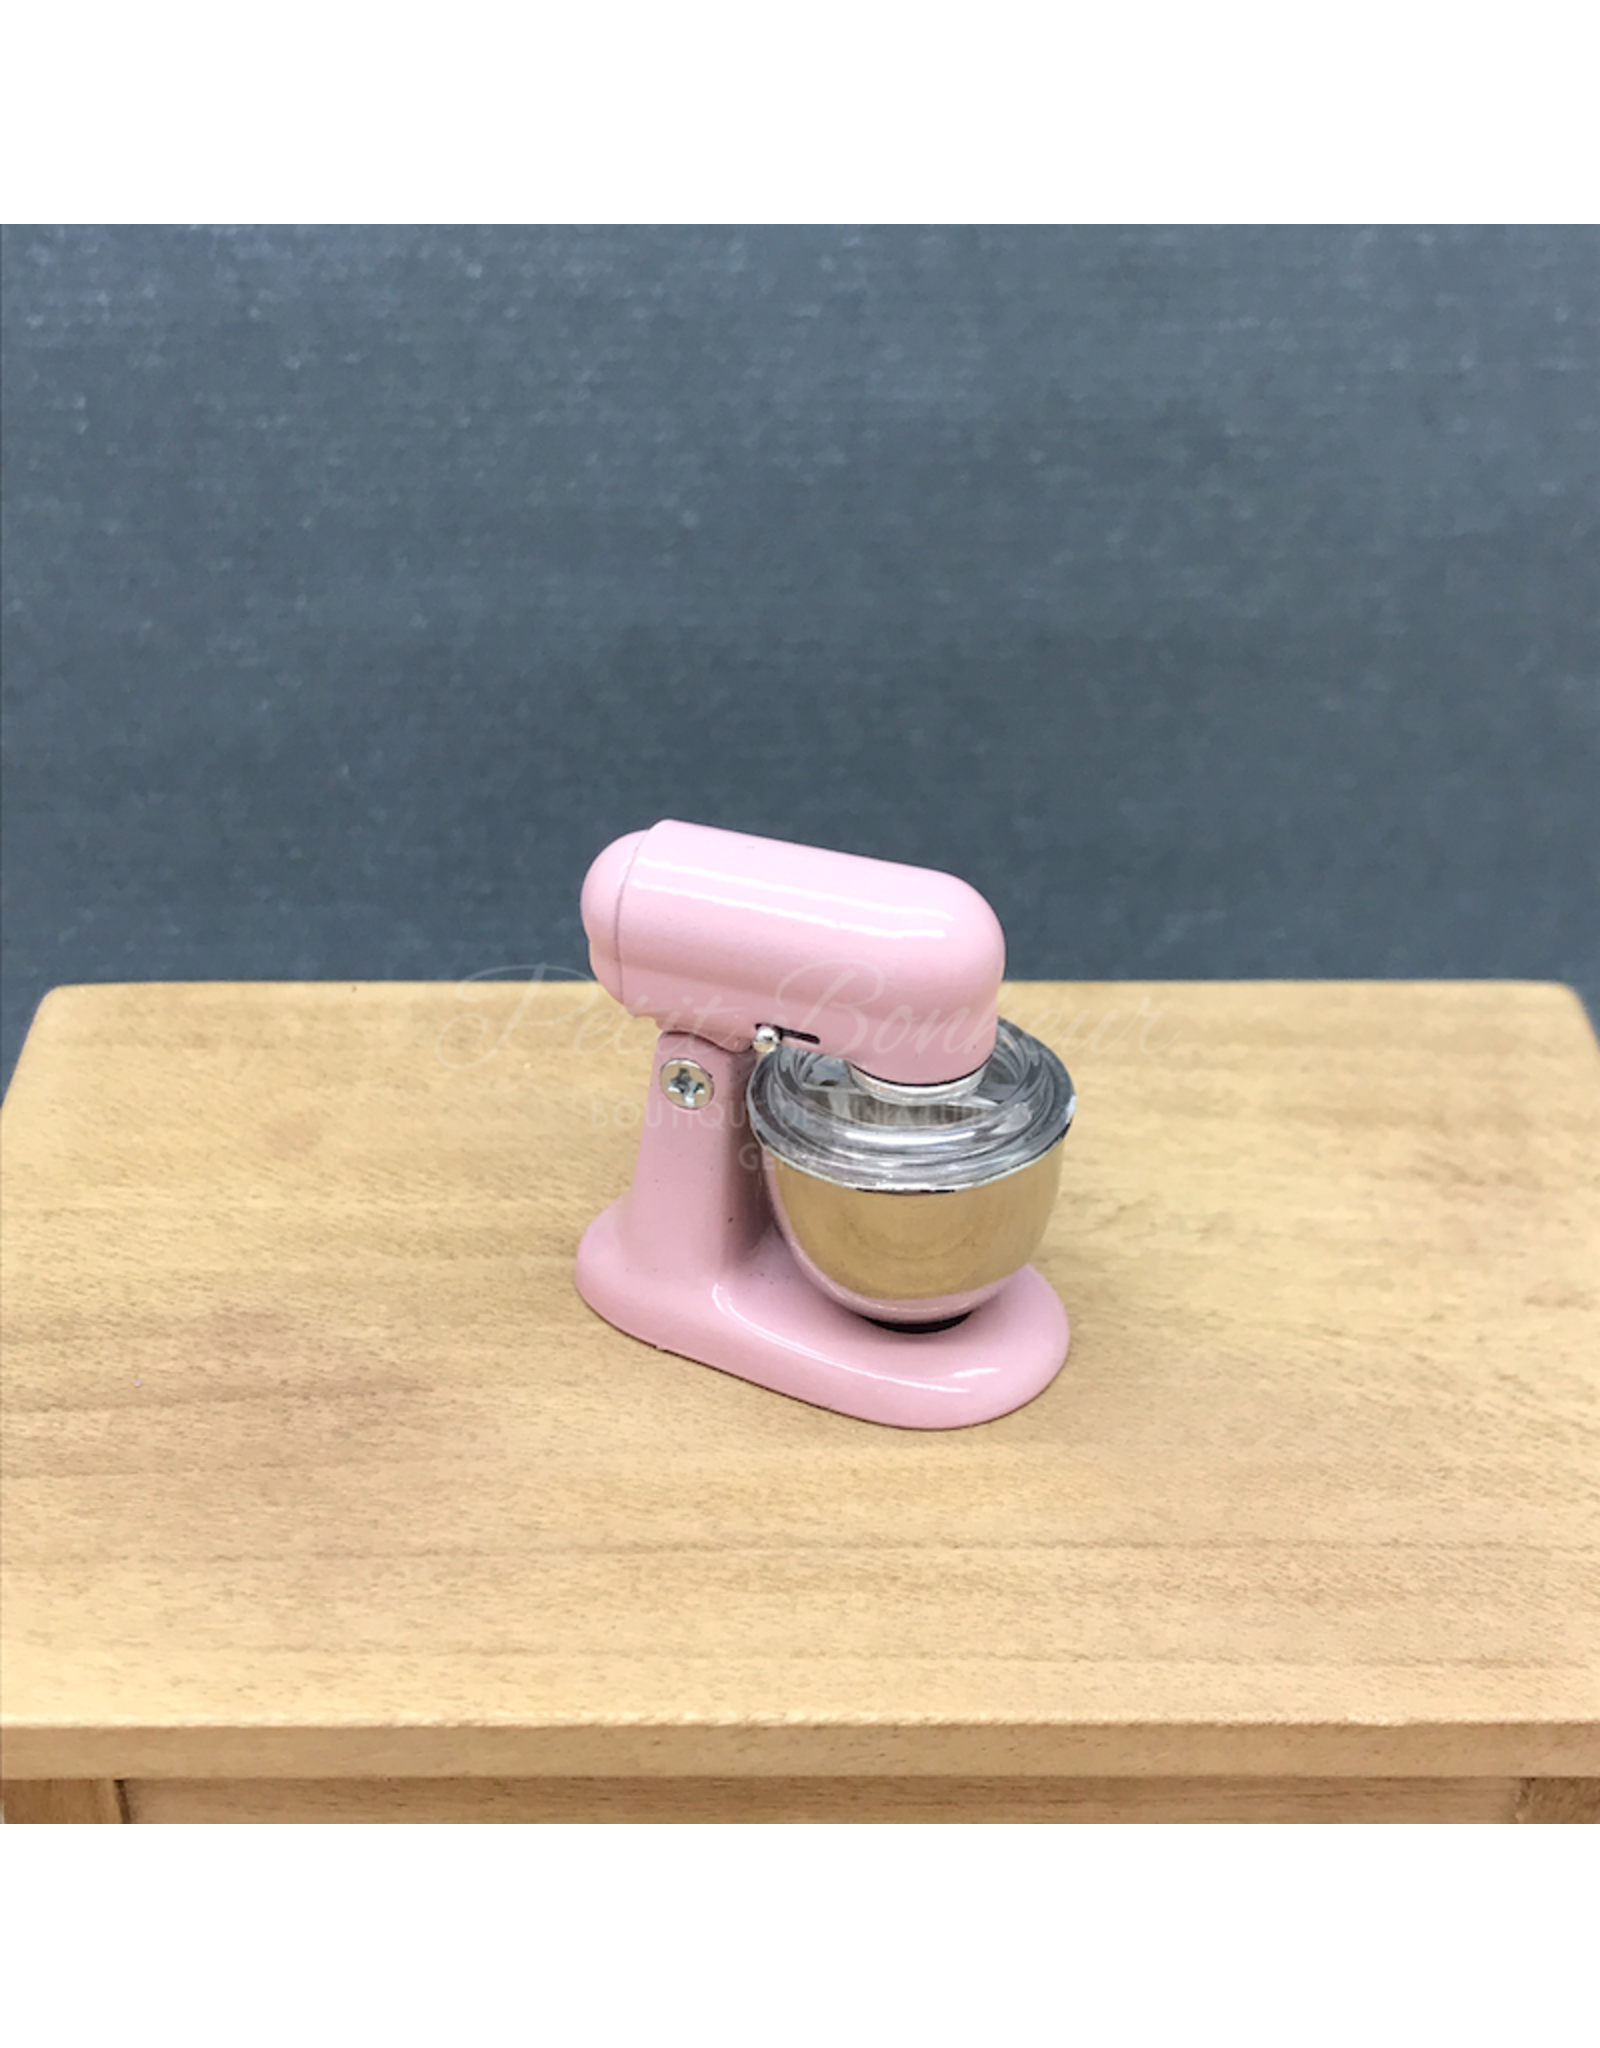 Robot mixer en métal, rose, articulé miniature 1:12